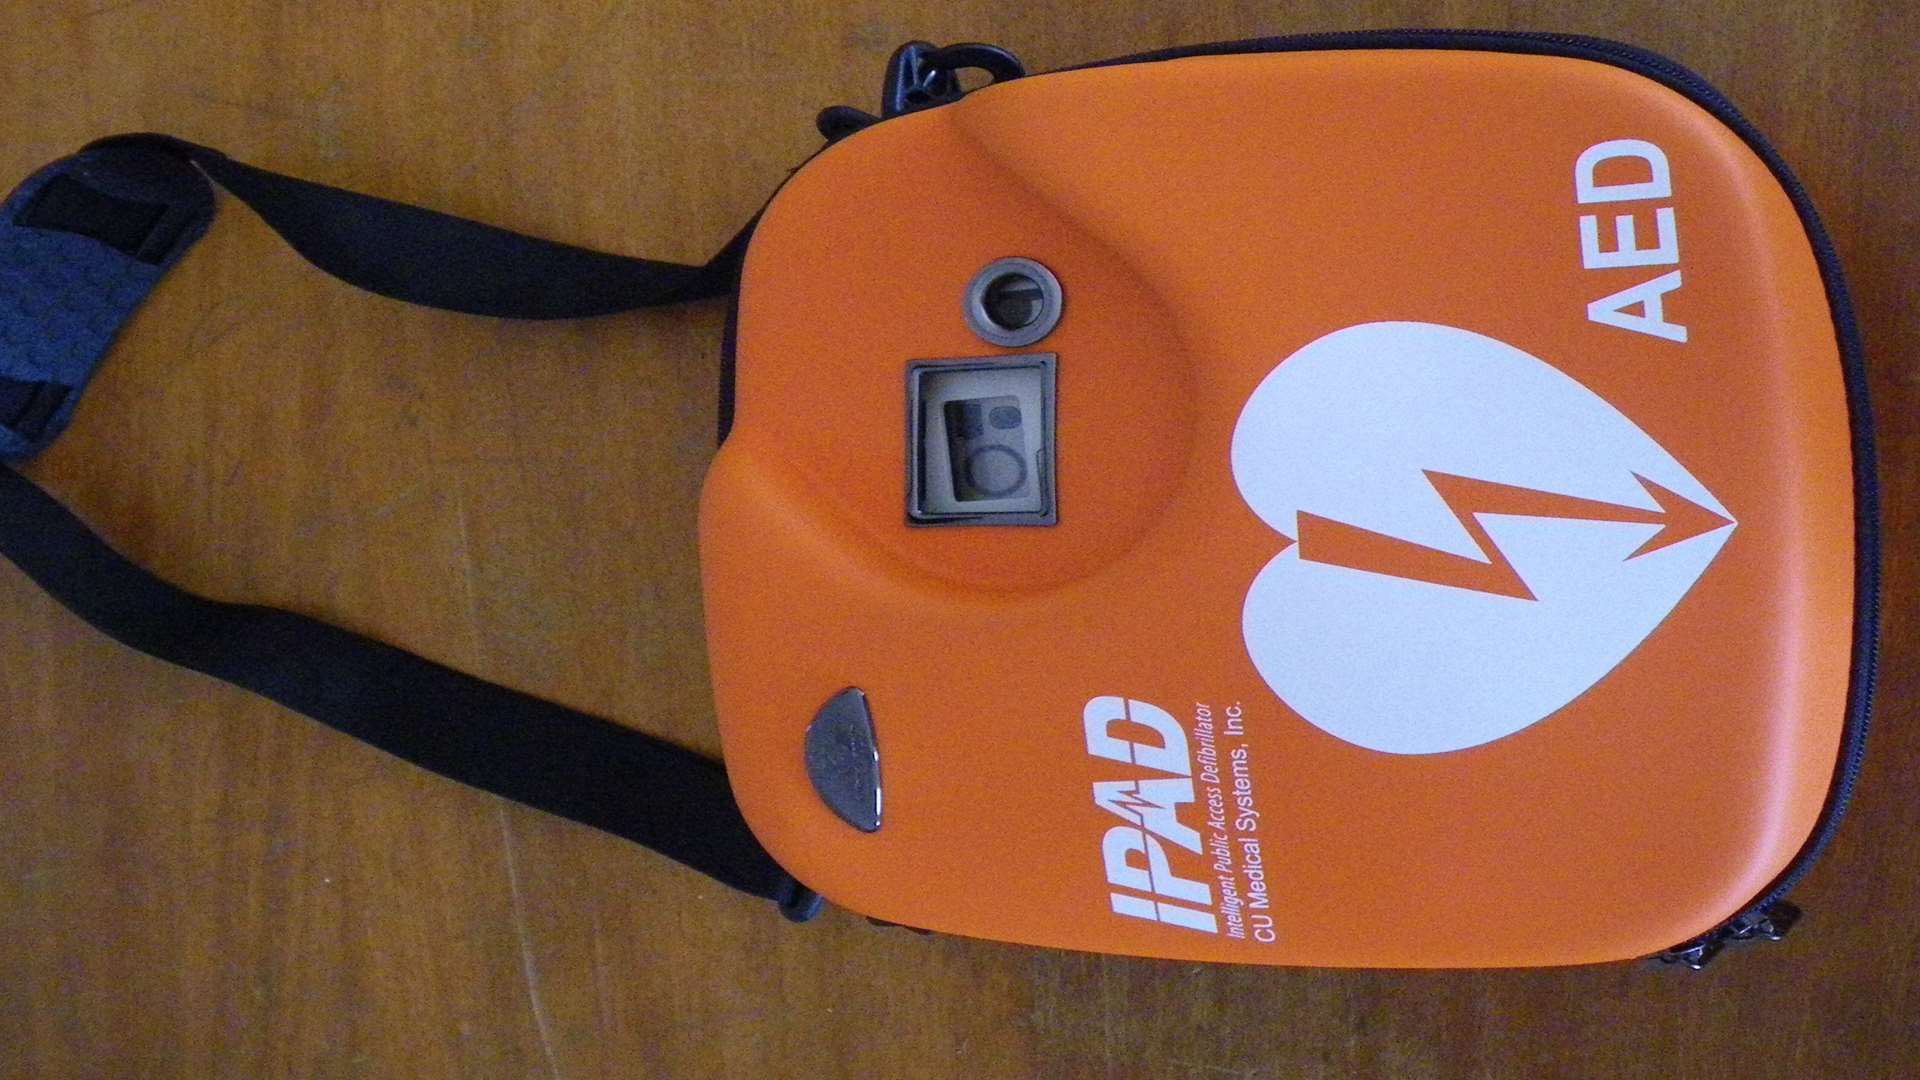 The defibrillator was in an orange carry case